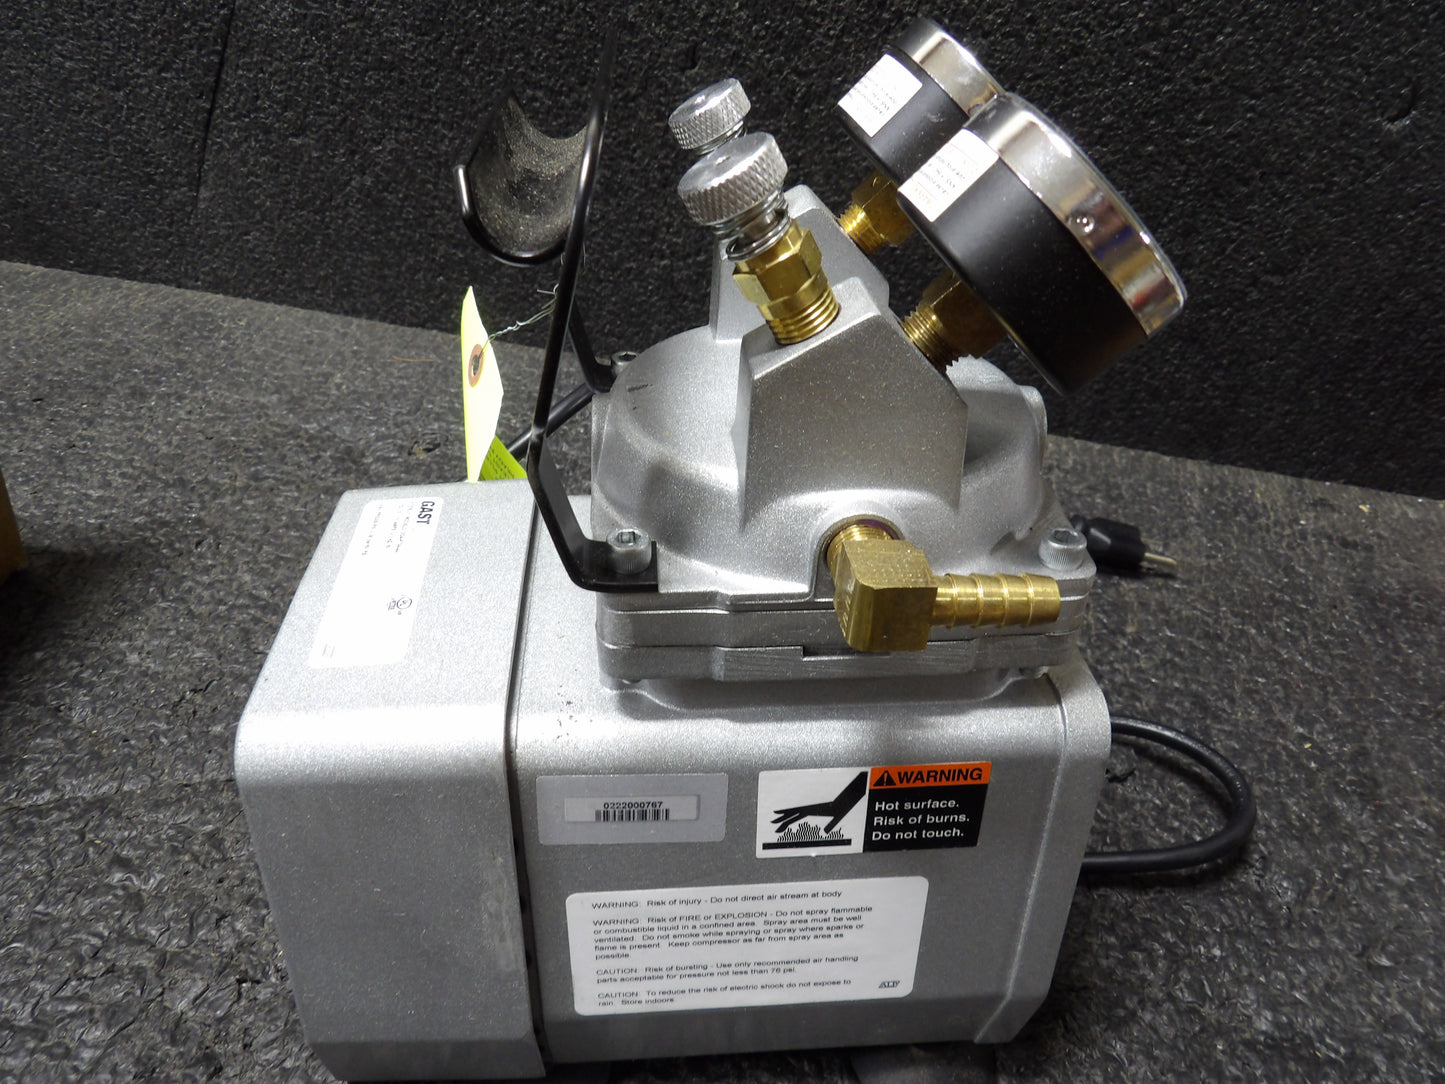 GAST Compressor/Vacuum Pump: 1/8 hp, 115V AC, 25.5 in Hg Max Vacuum, 60 psi Max Continuous Pressure (CR00832-WTA26)